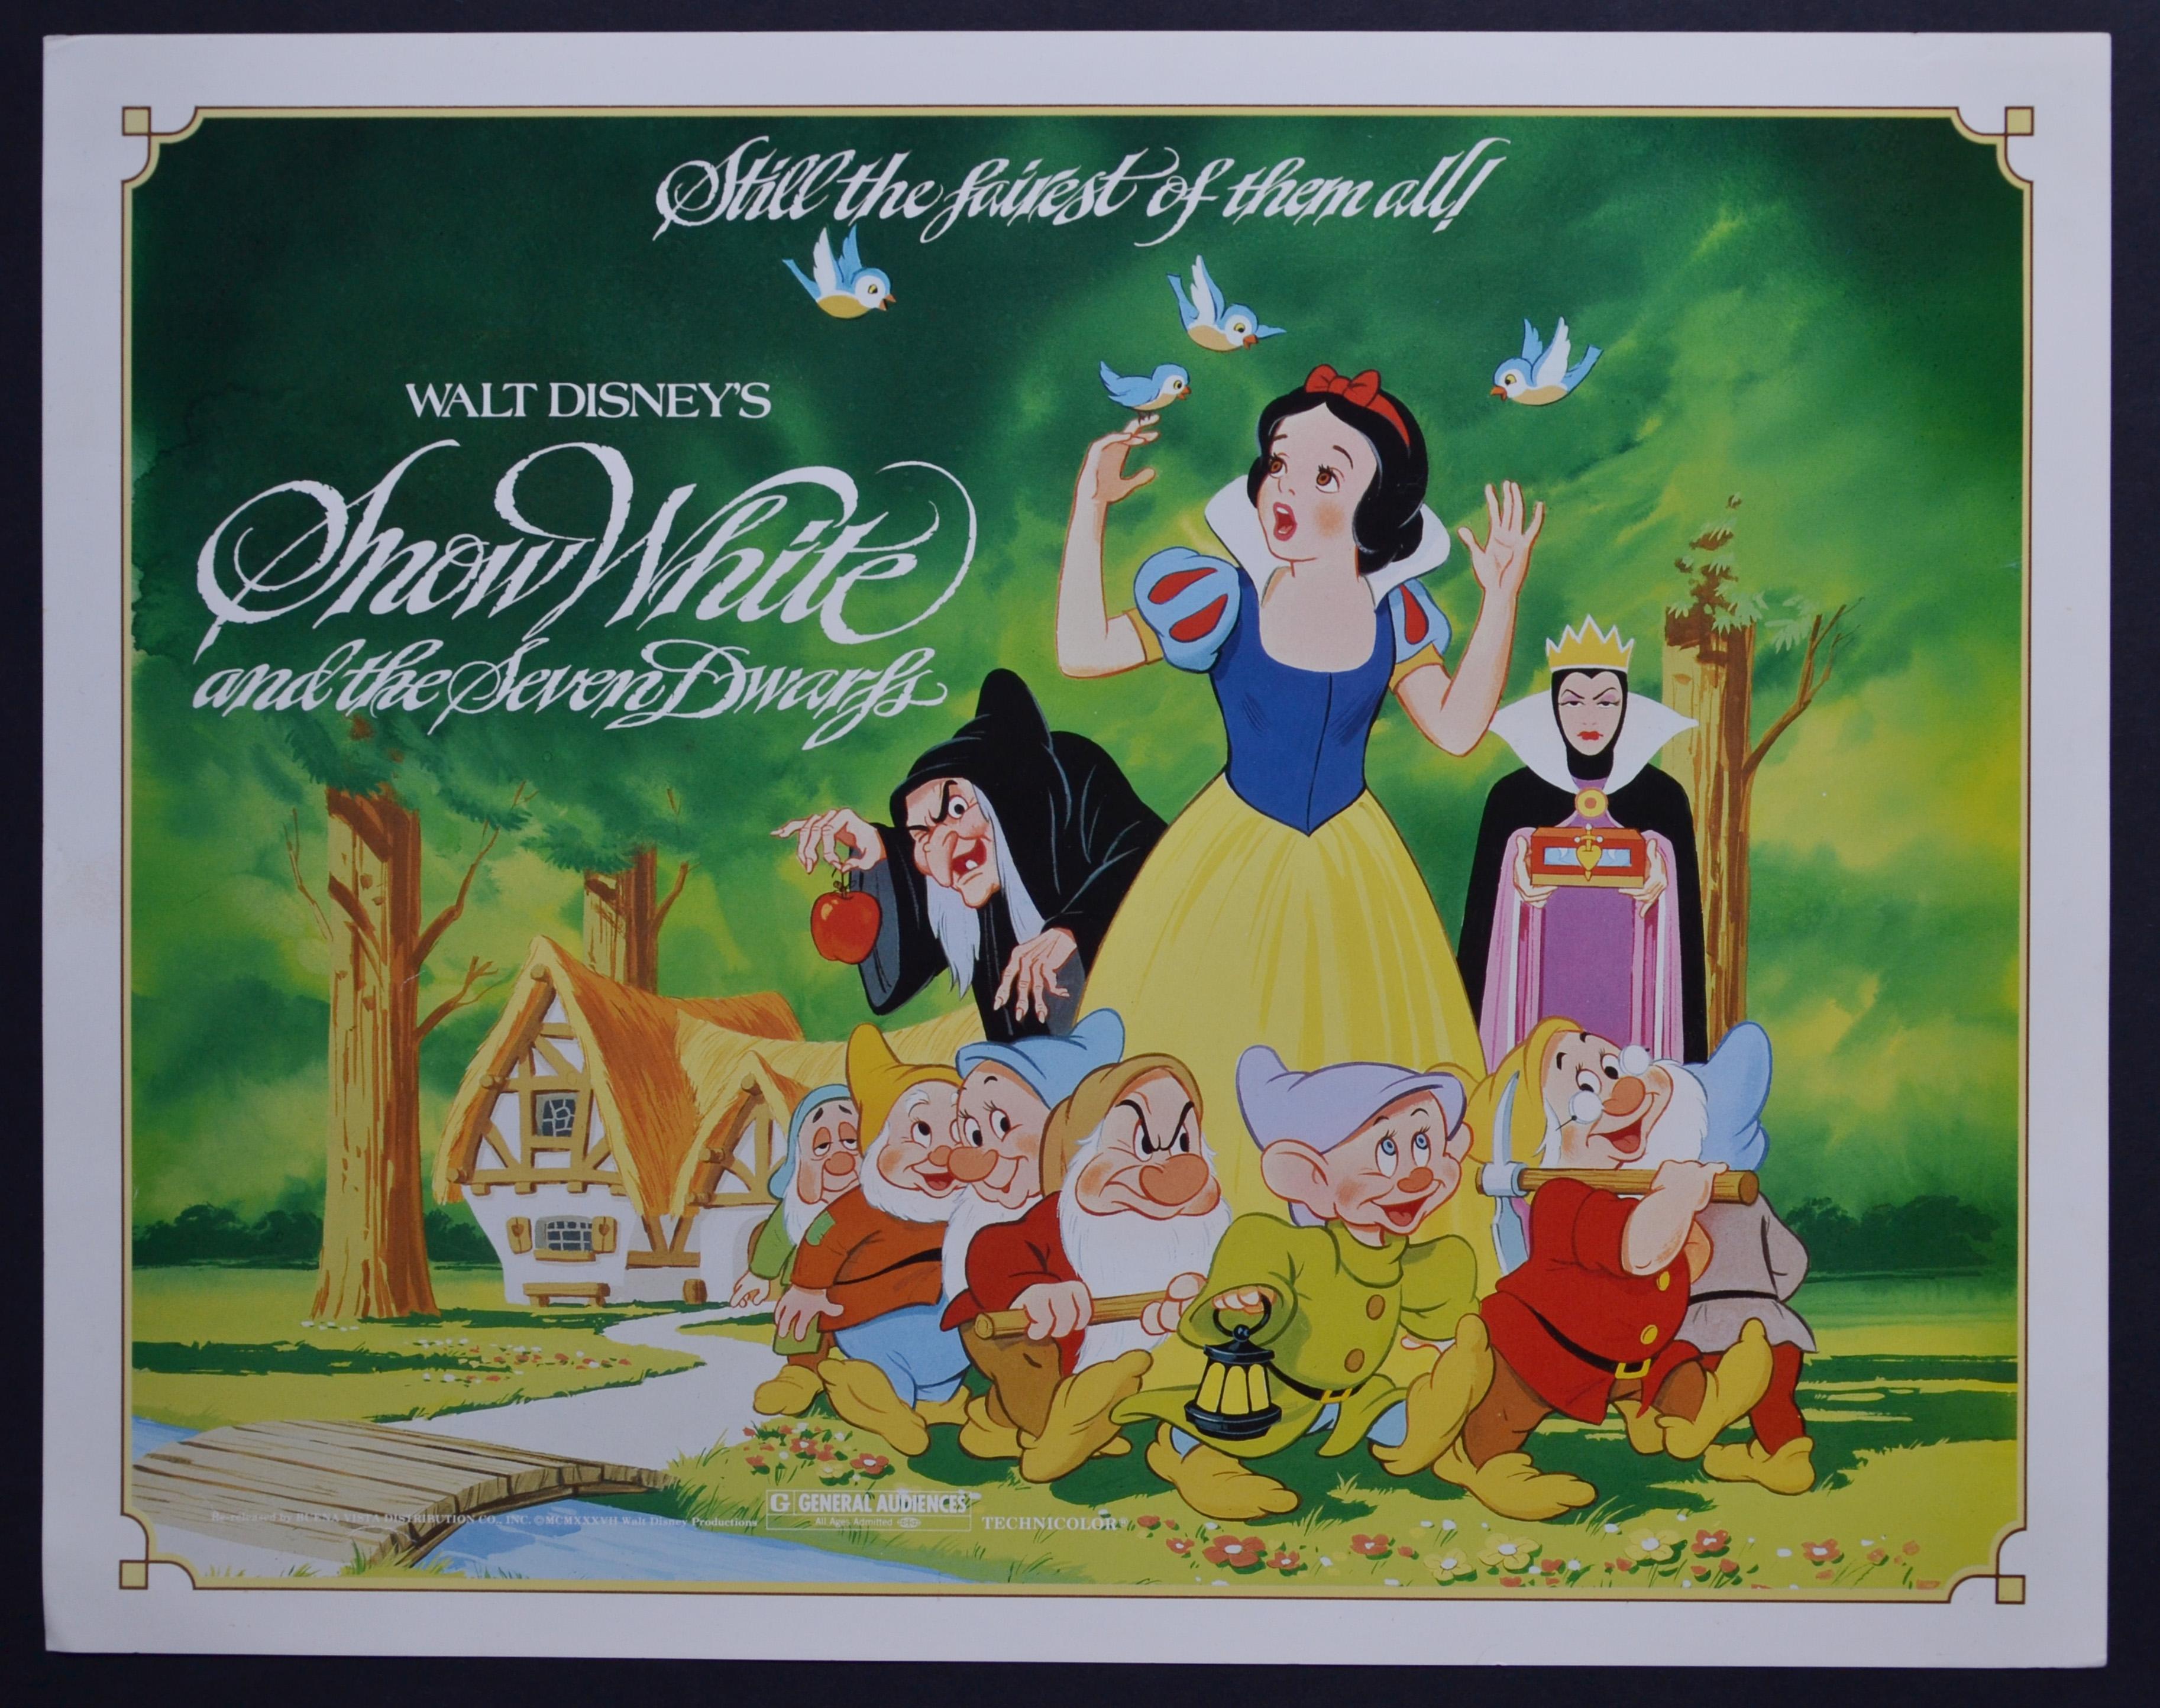 Unknown Interior Print – Snow White and the Seven Dwarfs, Lobby-Karte von Walt Disneys, USA 1937.